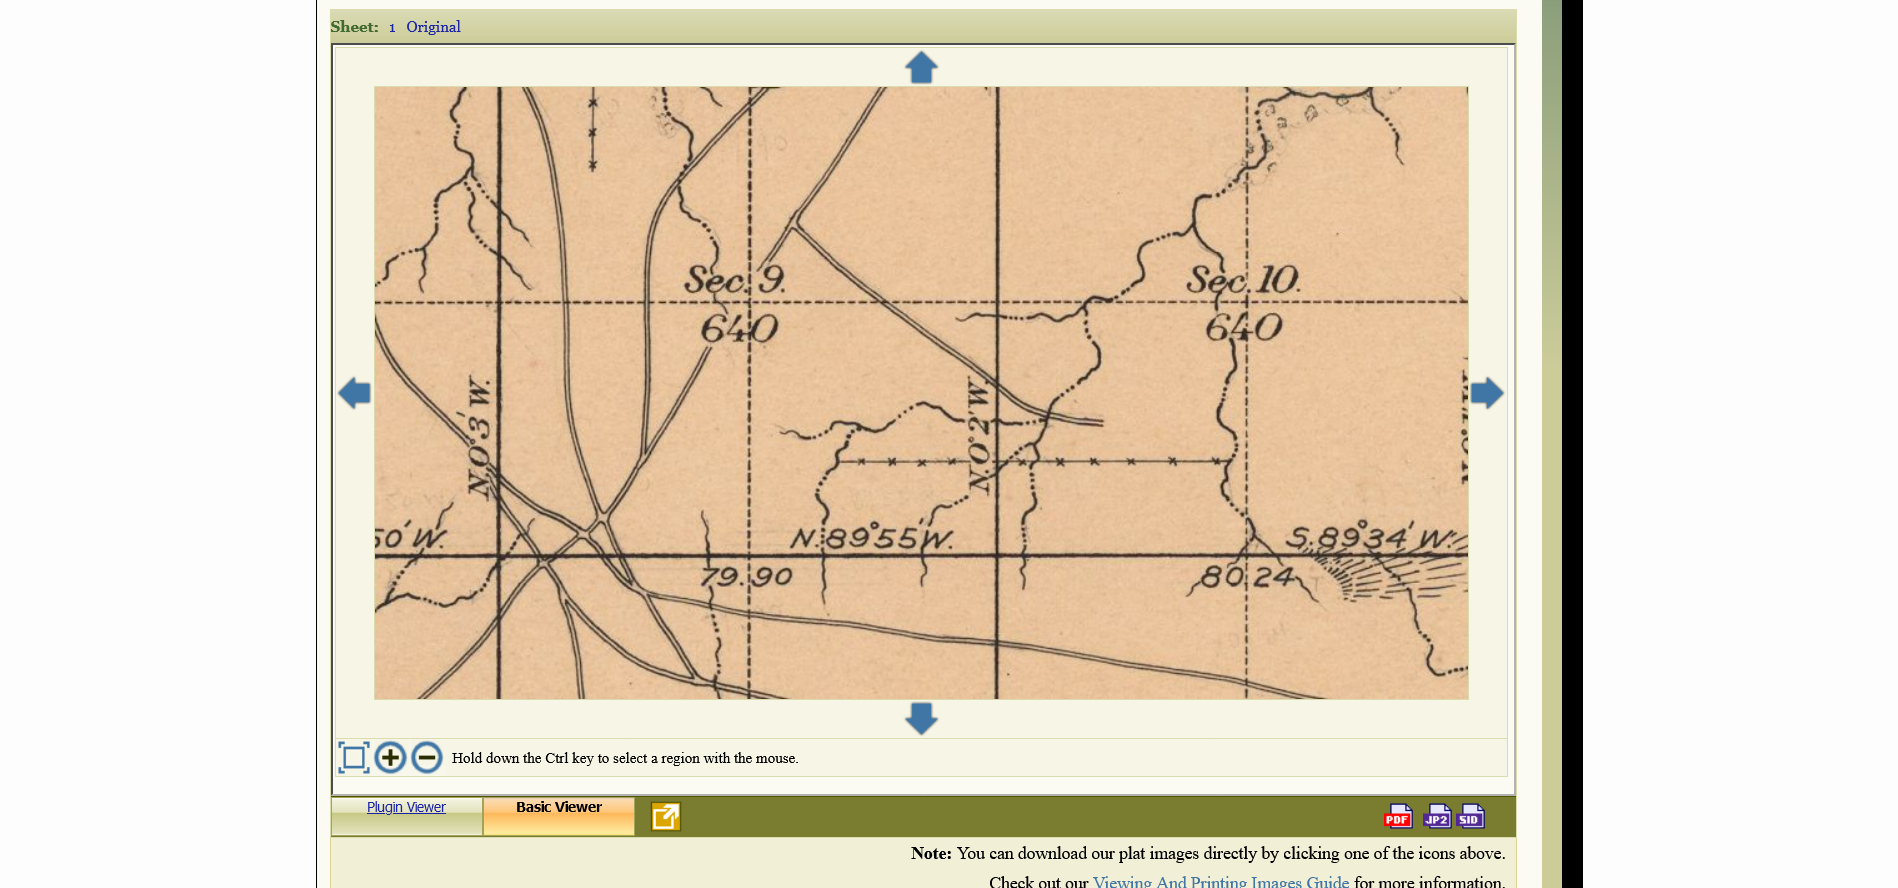 General Land Office 1896 Survey Plat for Township 19N Range 13E